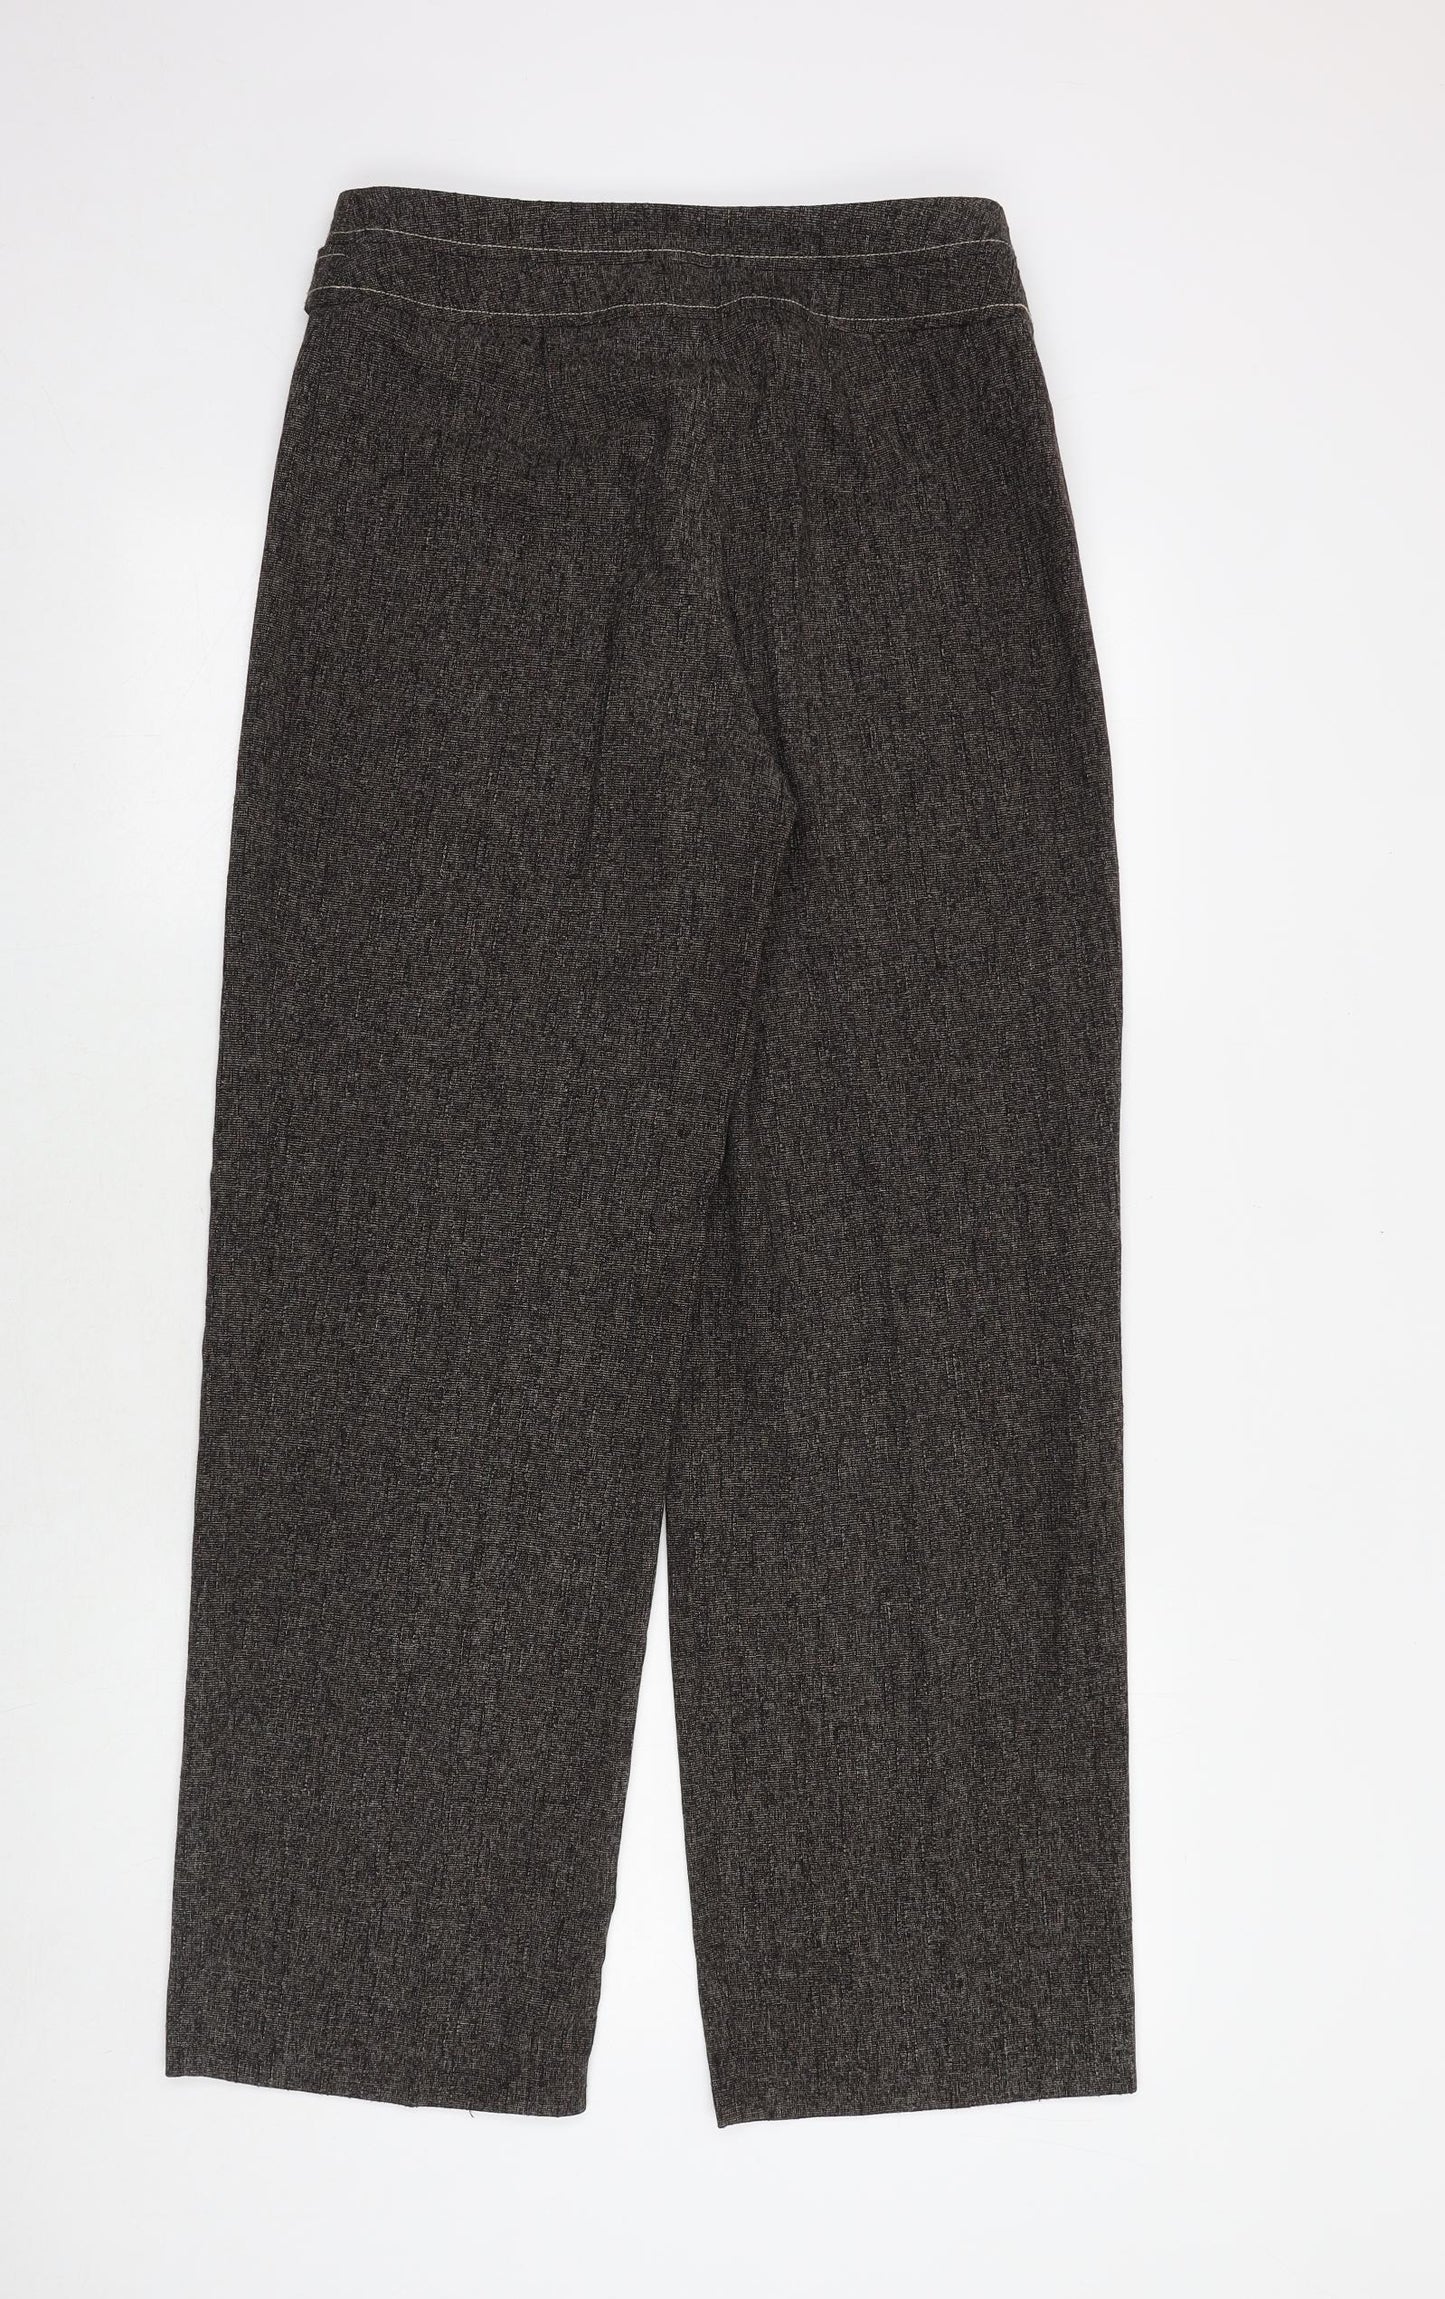 Roman Originals Womens Brown Geometric Viscose Trousers Size 12 Regular Zip